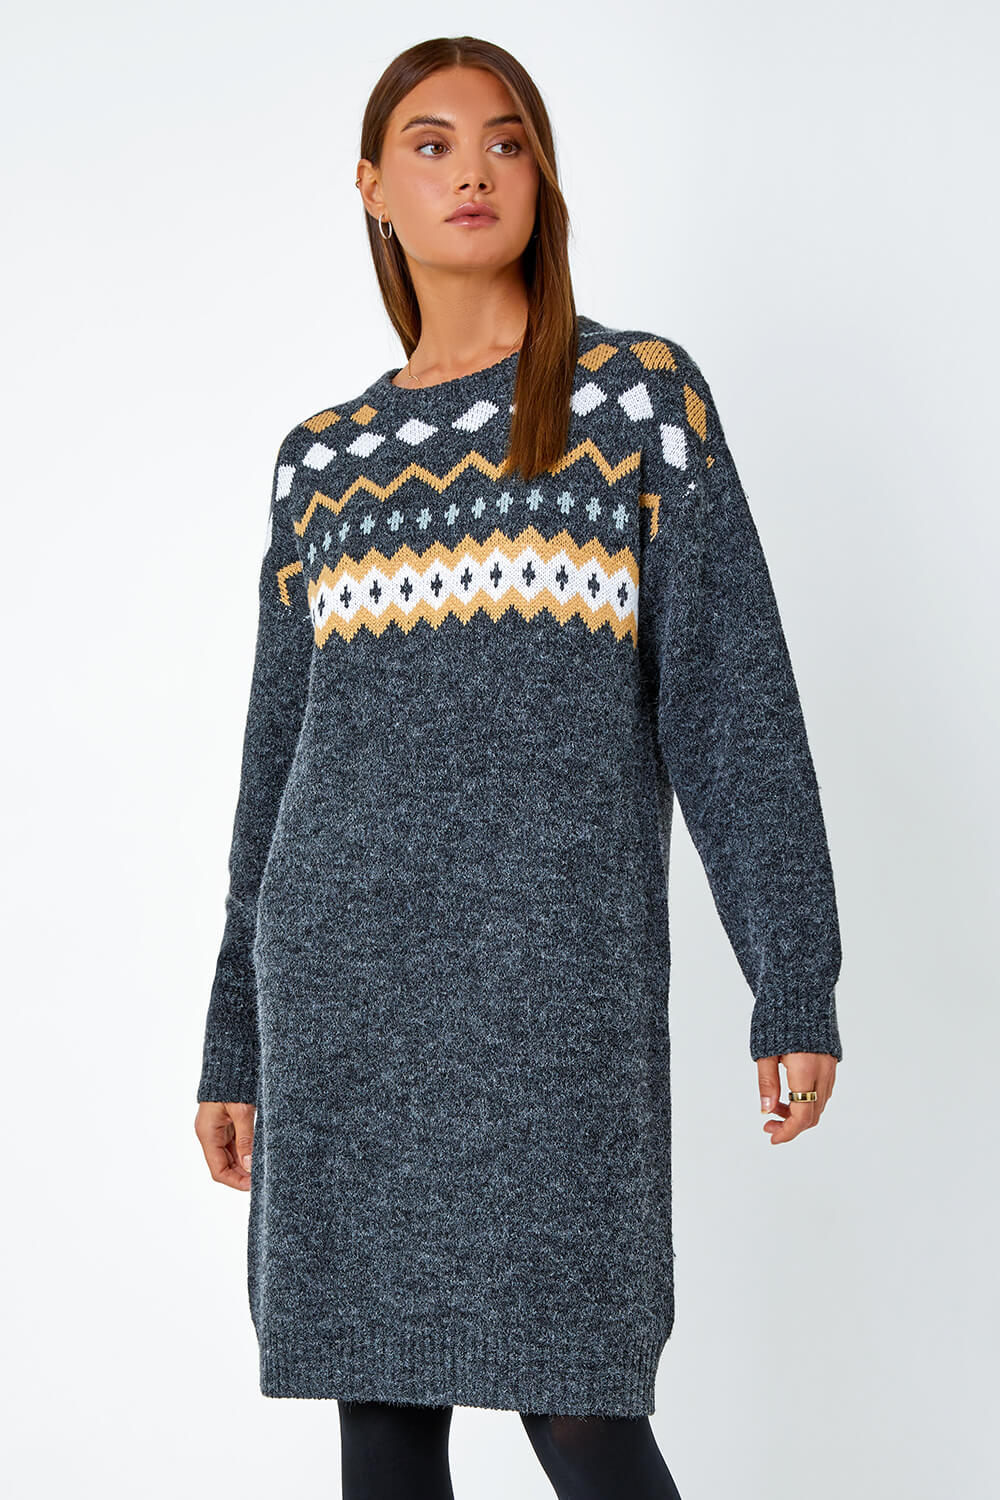 Dark Grey Nordic Print Knitted Jumper Dress, Image 2 of 6